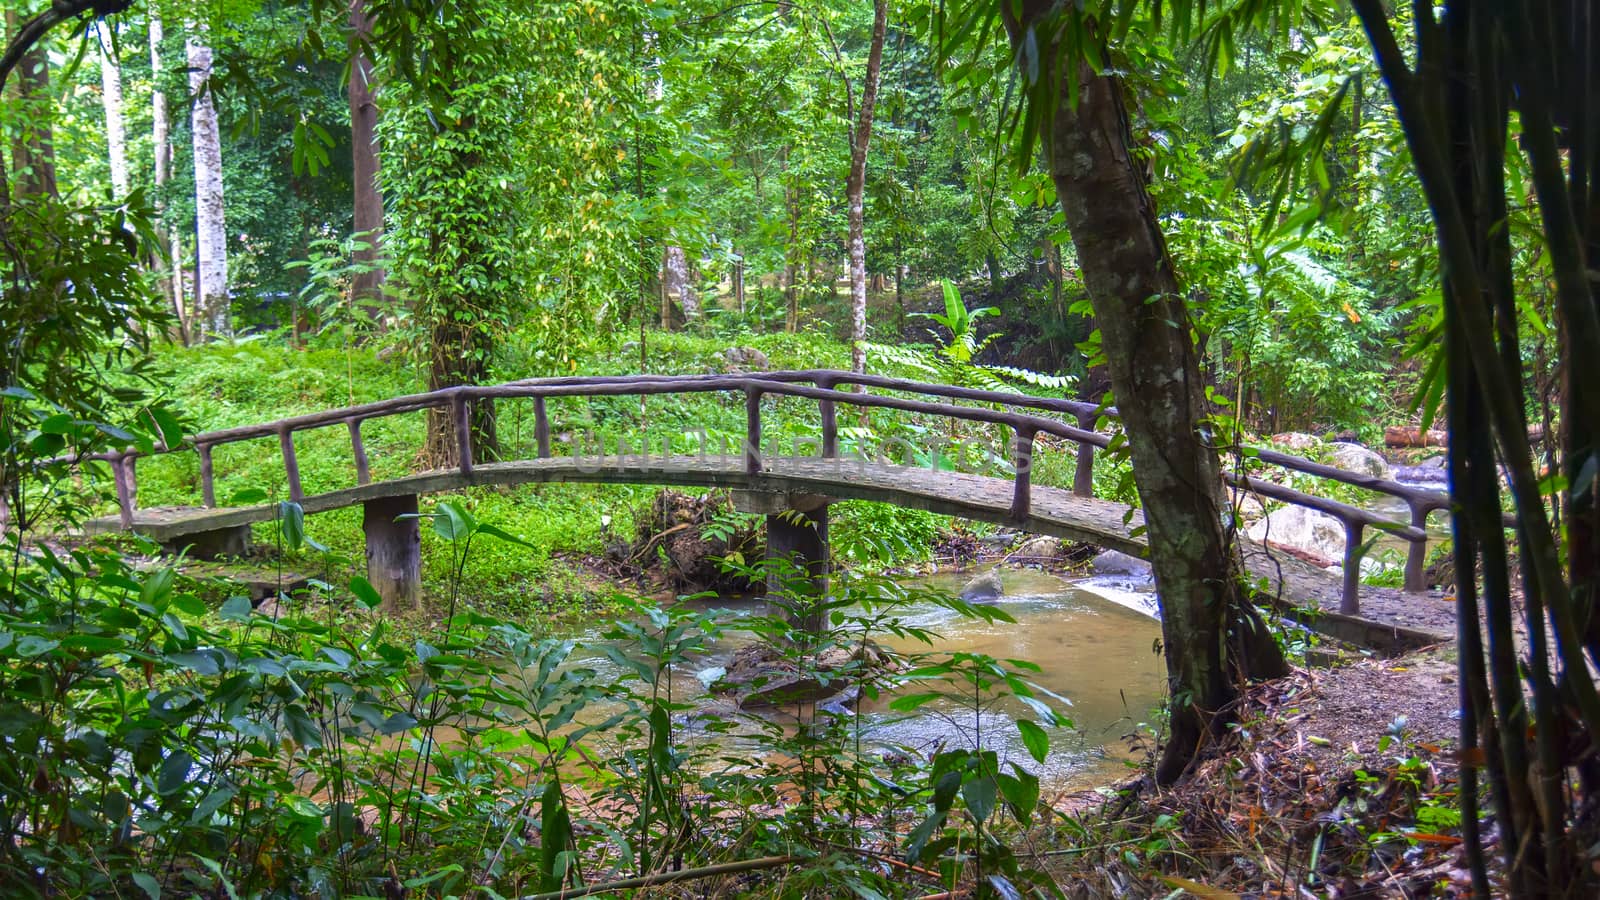 Bridge in Jungle Forest. Krabi Province of Thailand